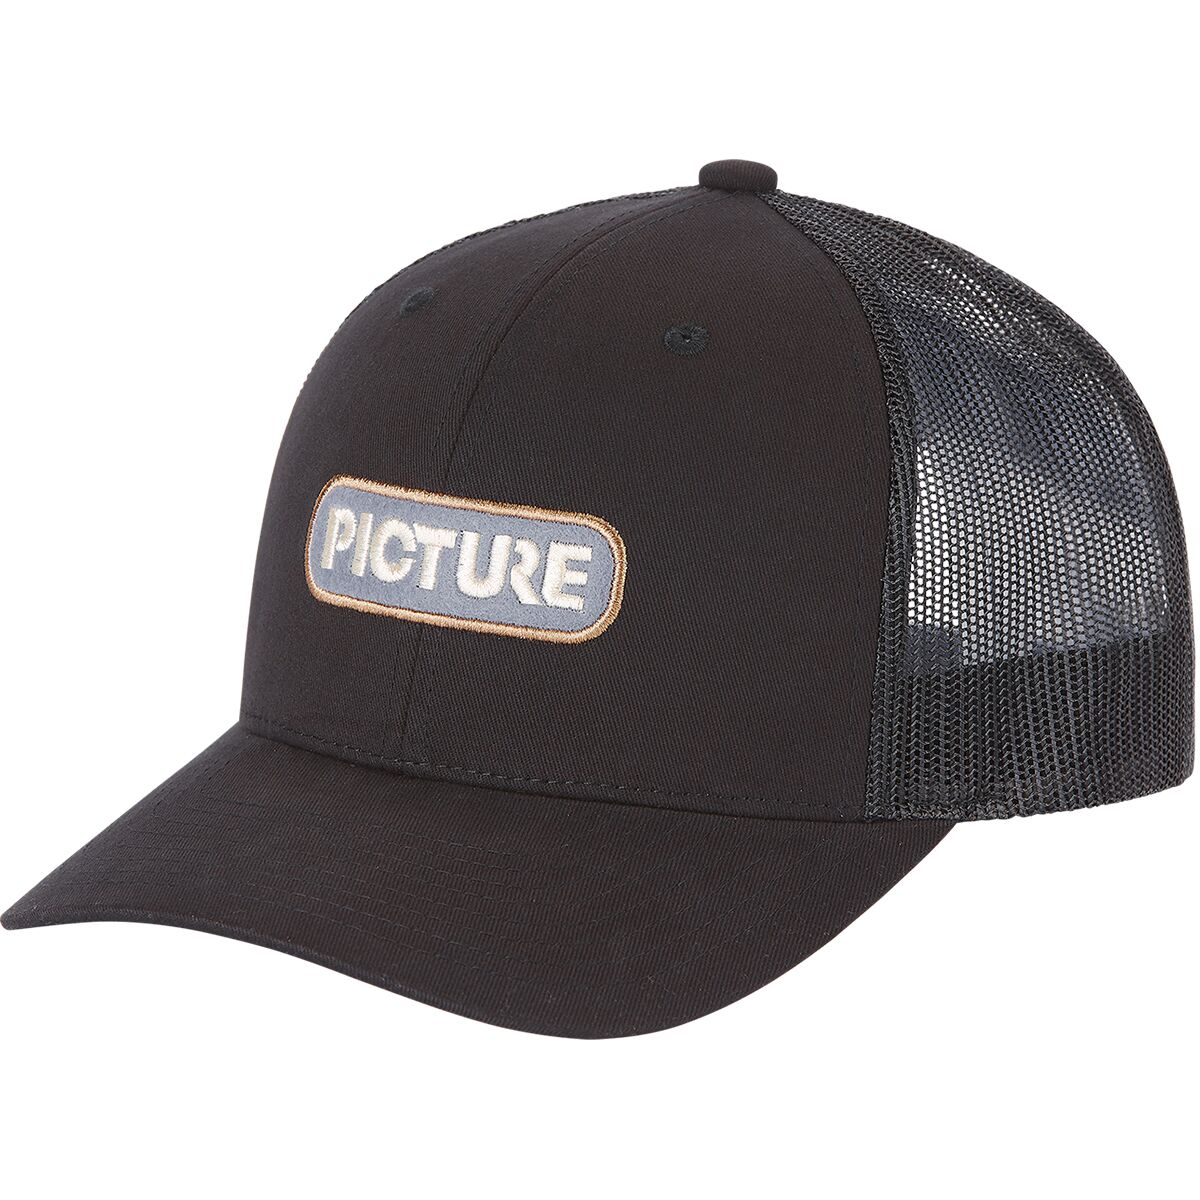 Picture Organic Byam Trucker Hat